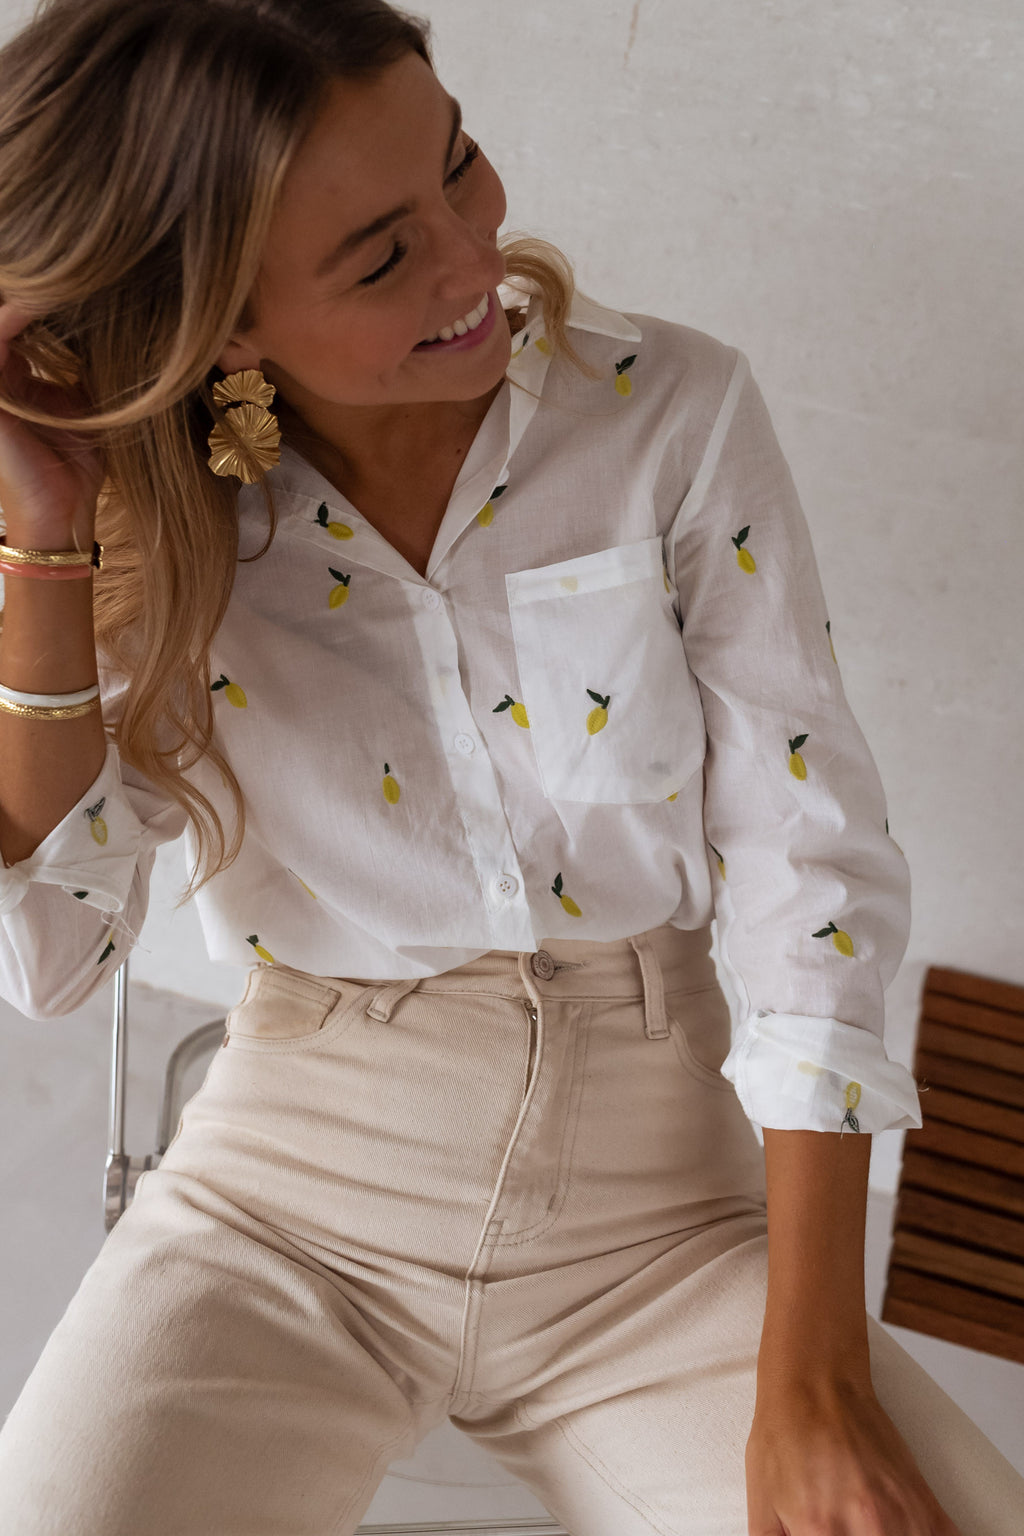 Ciara shirt - white patterned